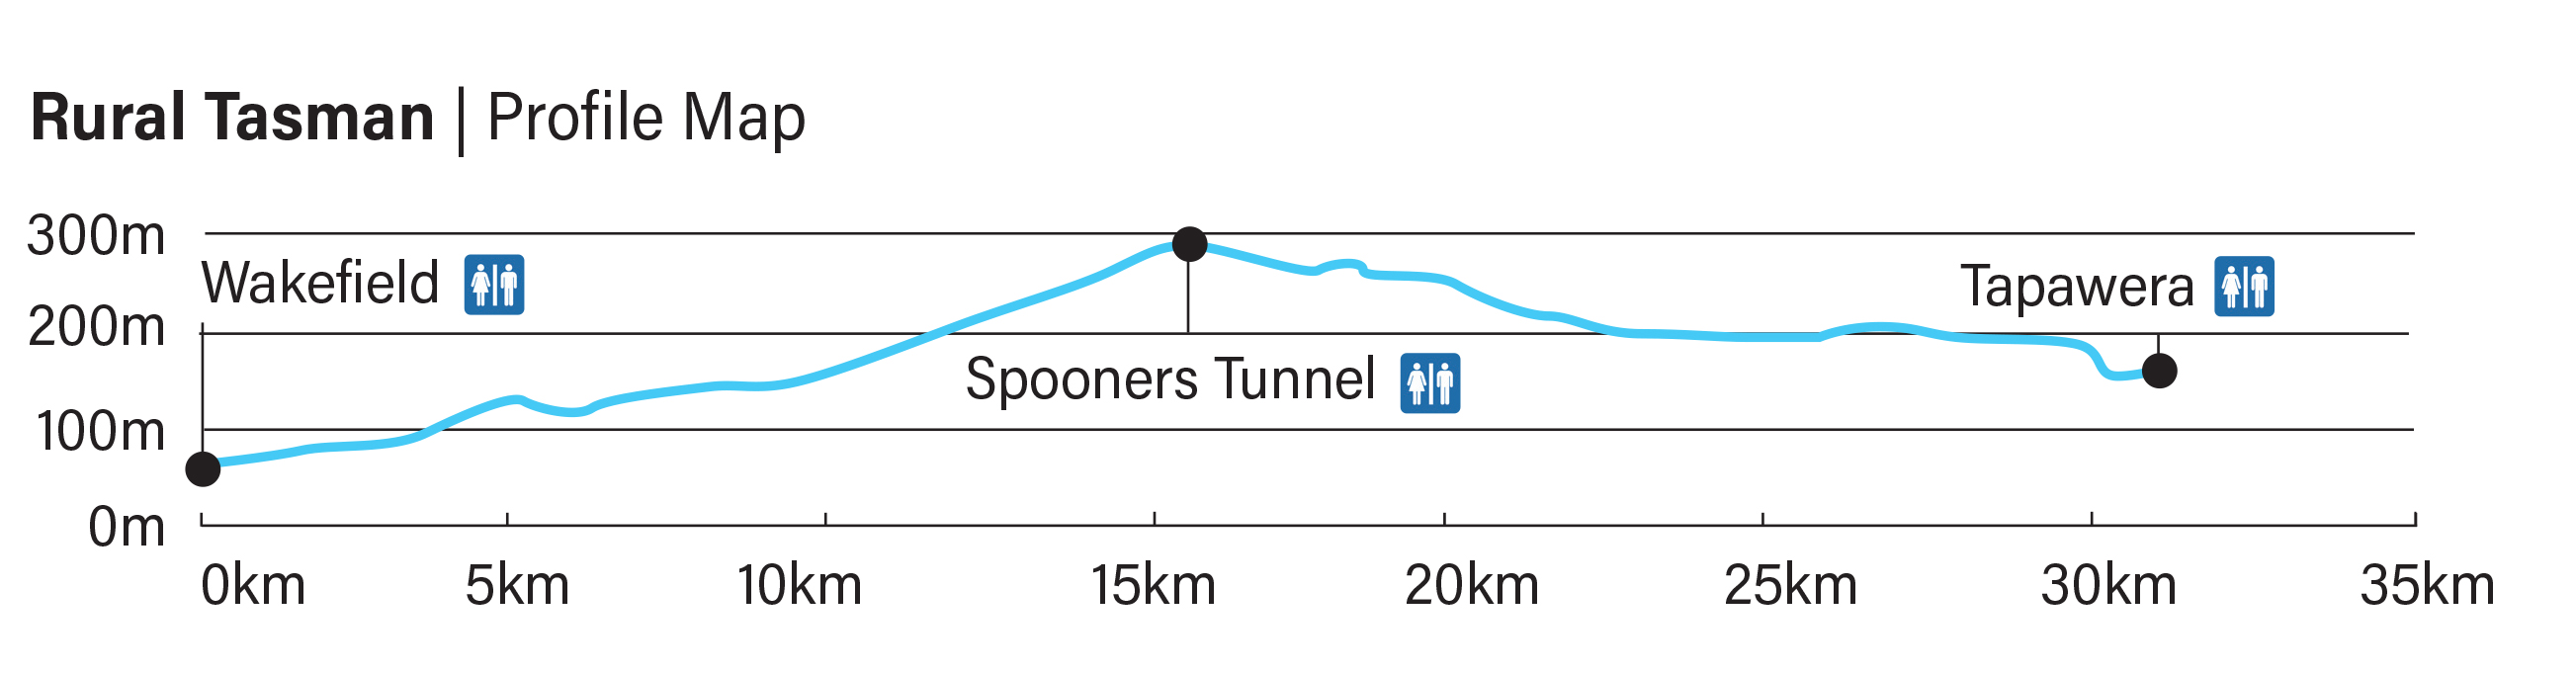 Rural Tasman: Wakefield | Spooners Tunnel | Tapawera Profile Map